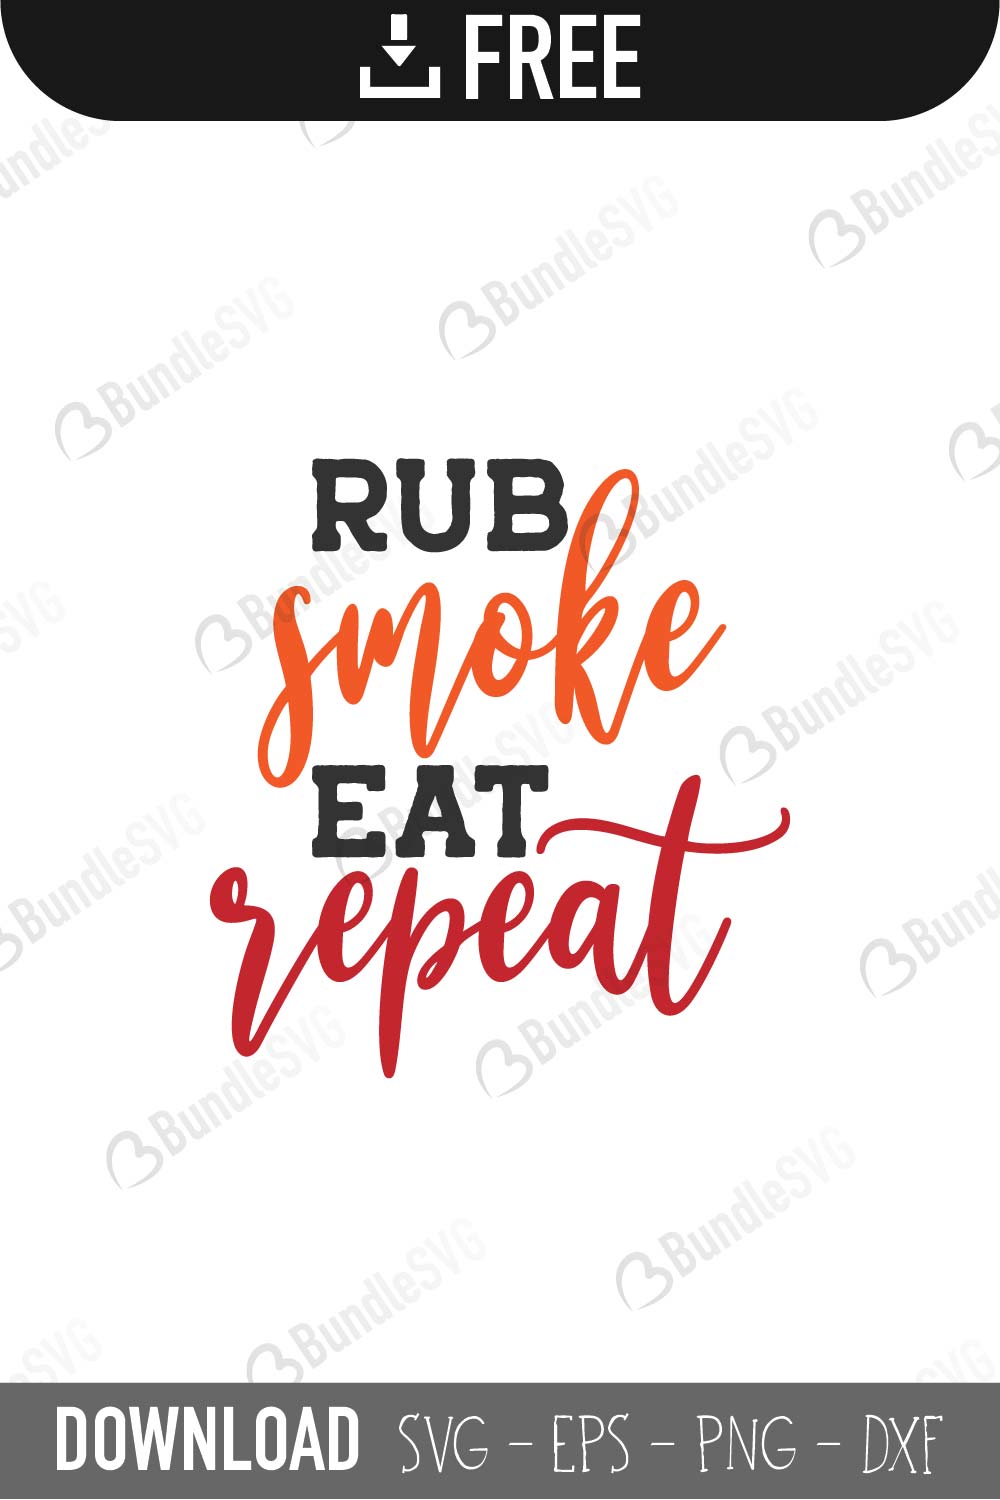 Download Rub Smoke Eat Repeat SVG Cut Files Free Download | BundleSVG